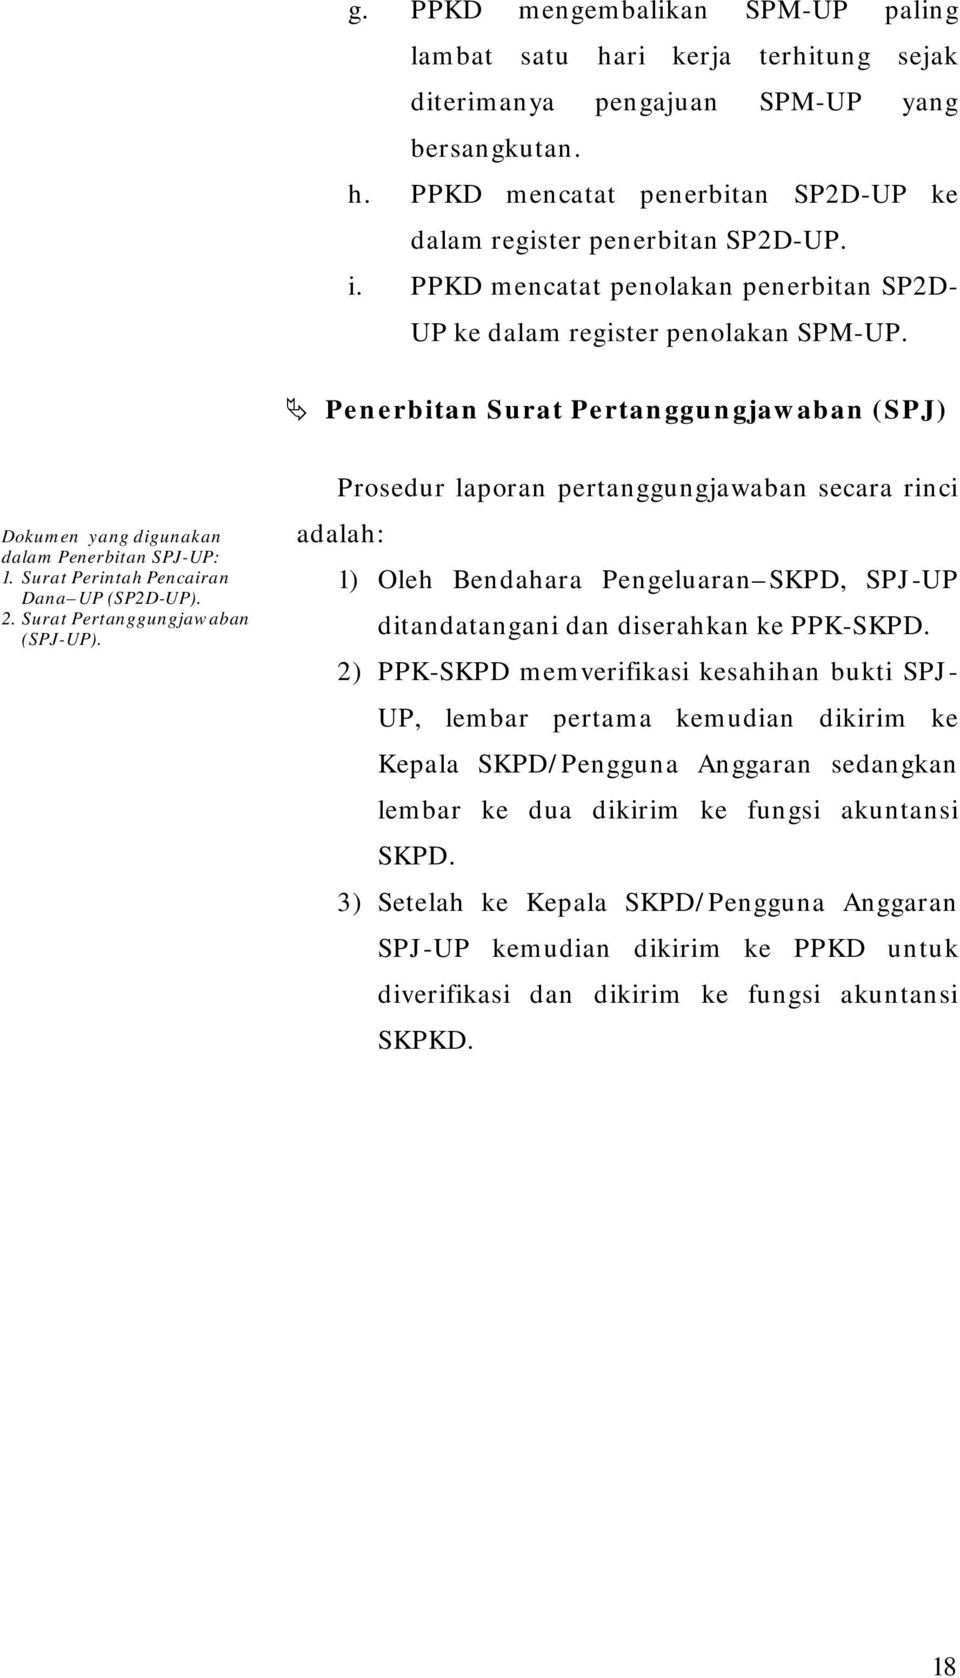 Surat Perintah Pencairan Dana UP (SPD-UP).. Surat Pertanggungjawaban (SPJ-UP).